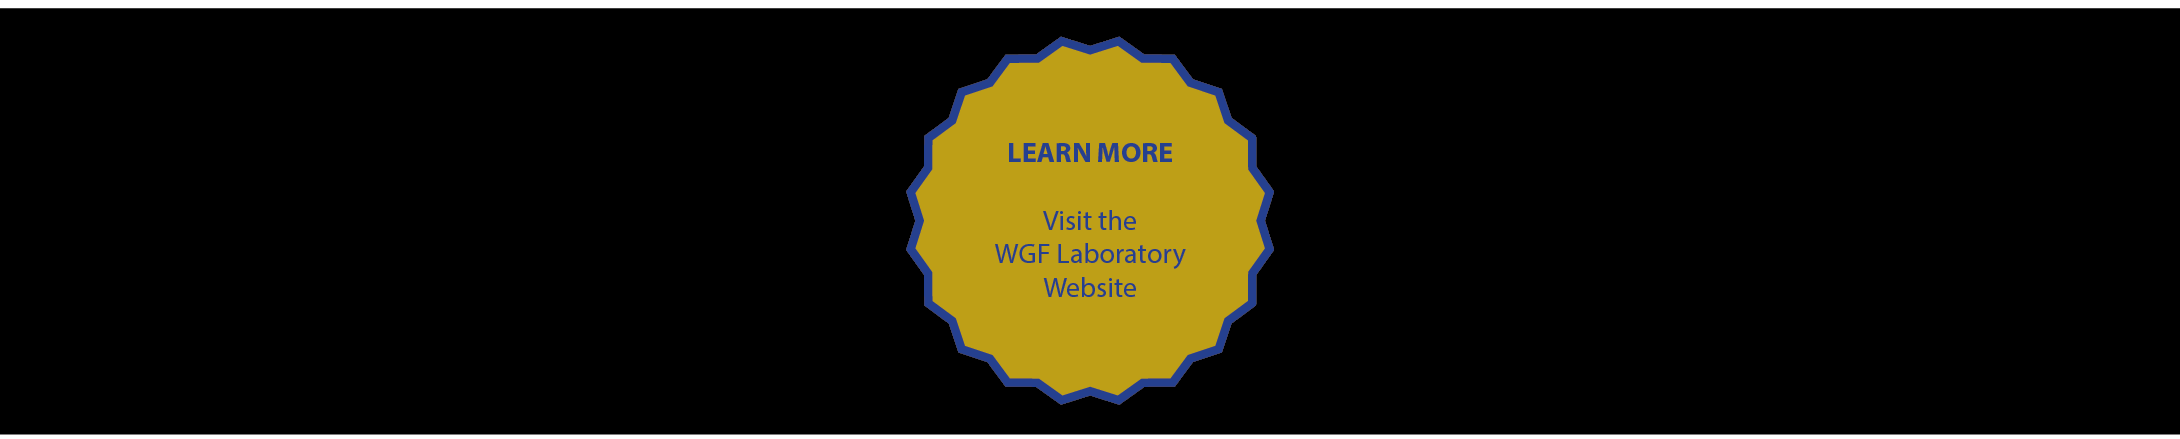 WGF Laboratory